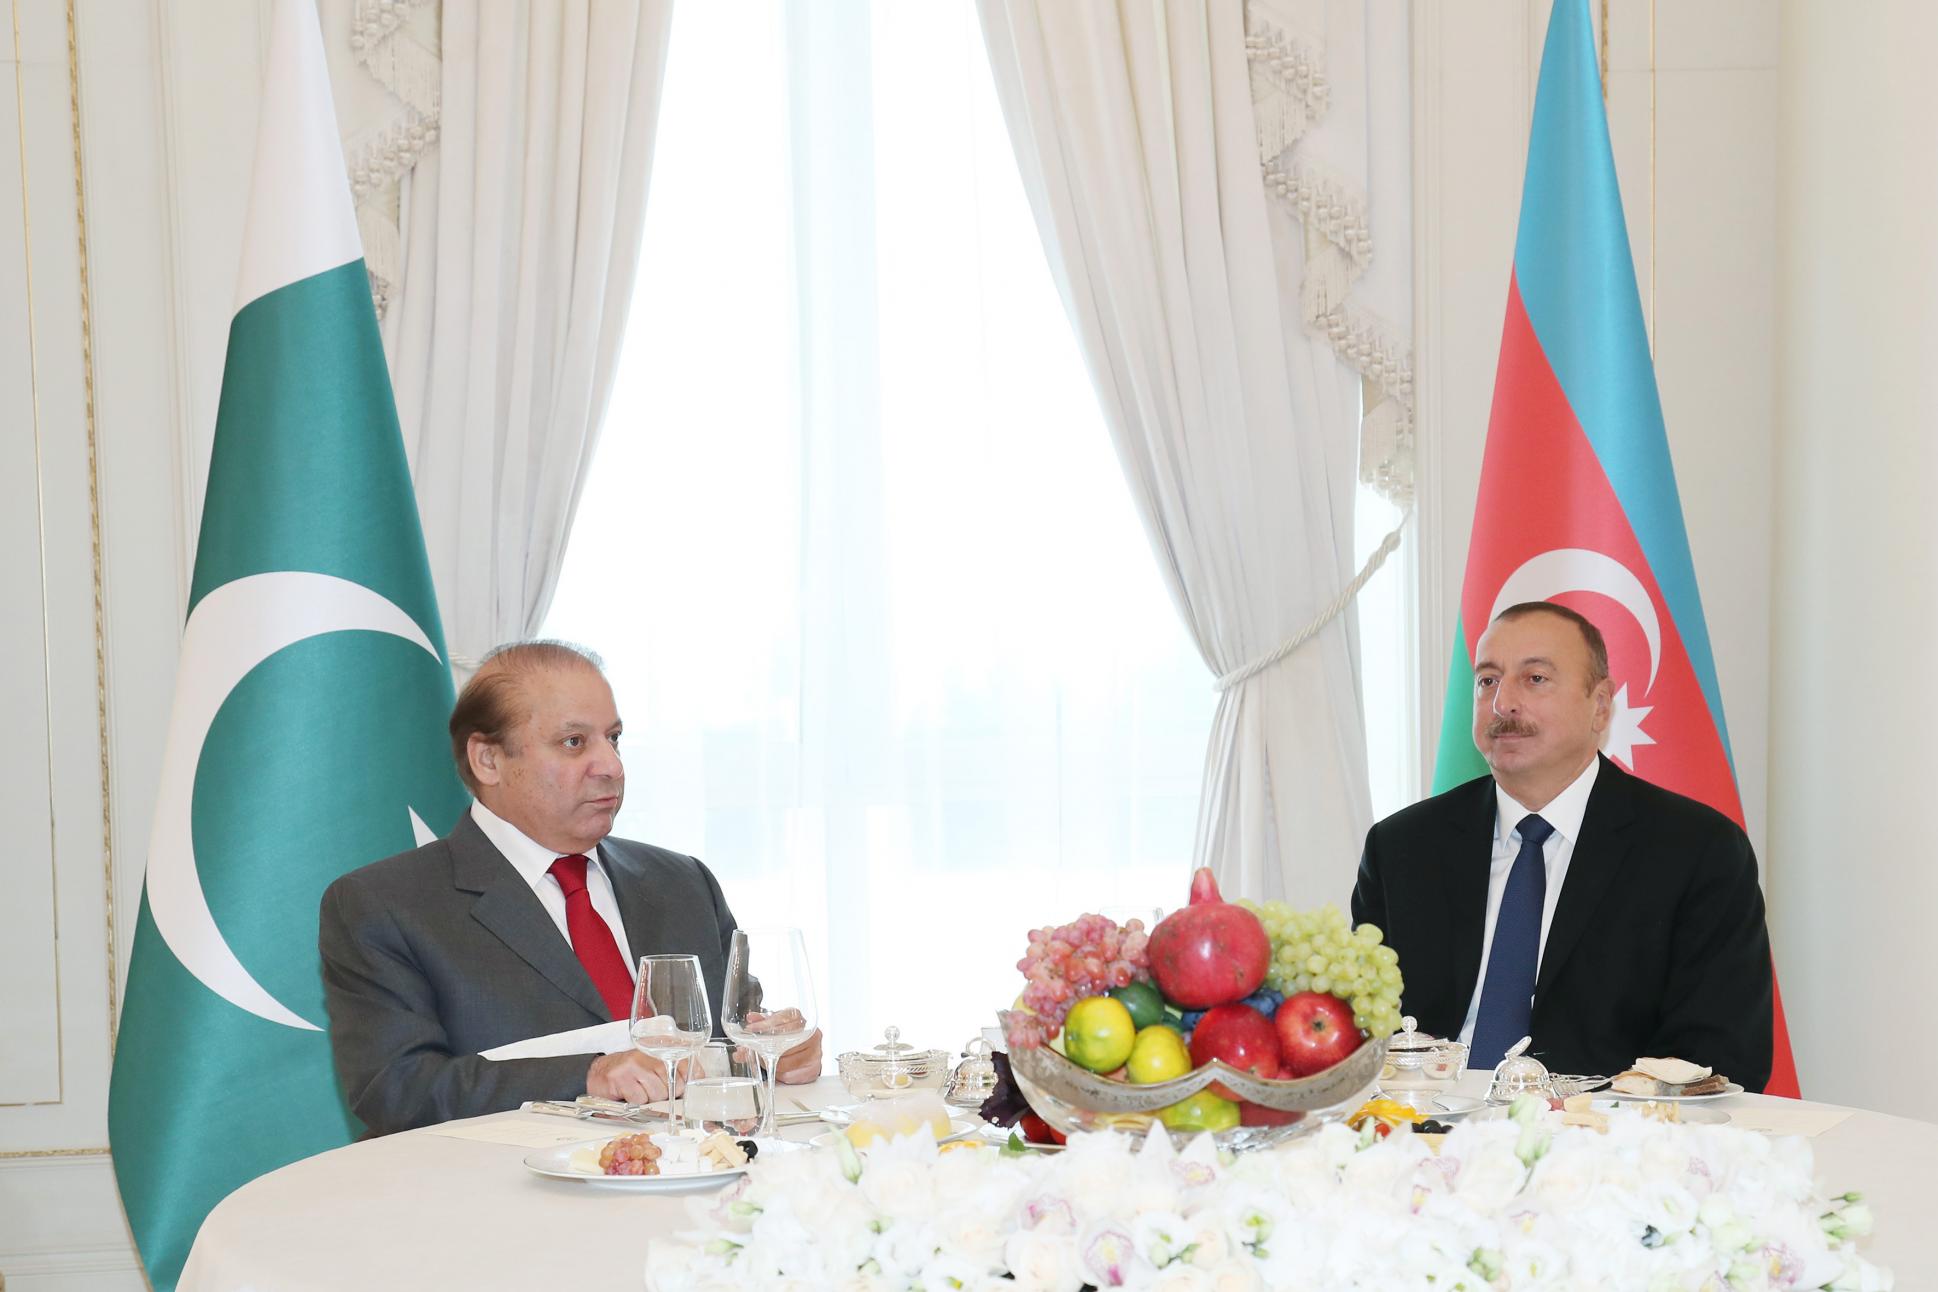 Azeri pro. Государственный обед от имени президента в честь президента Турции. Алиев и премьер-министр Пакистана фото. Мухаммад Наваз Шариф и Гейдар Алиев.